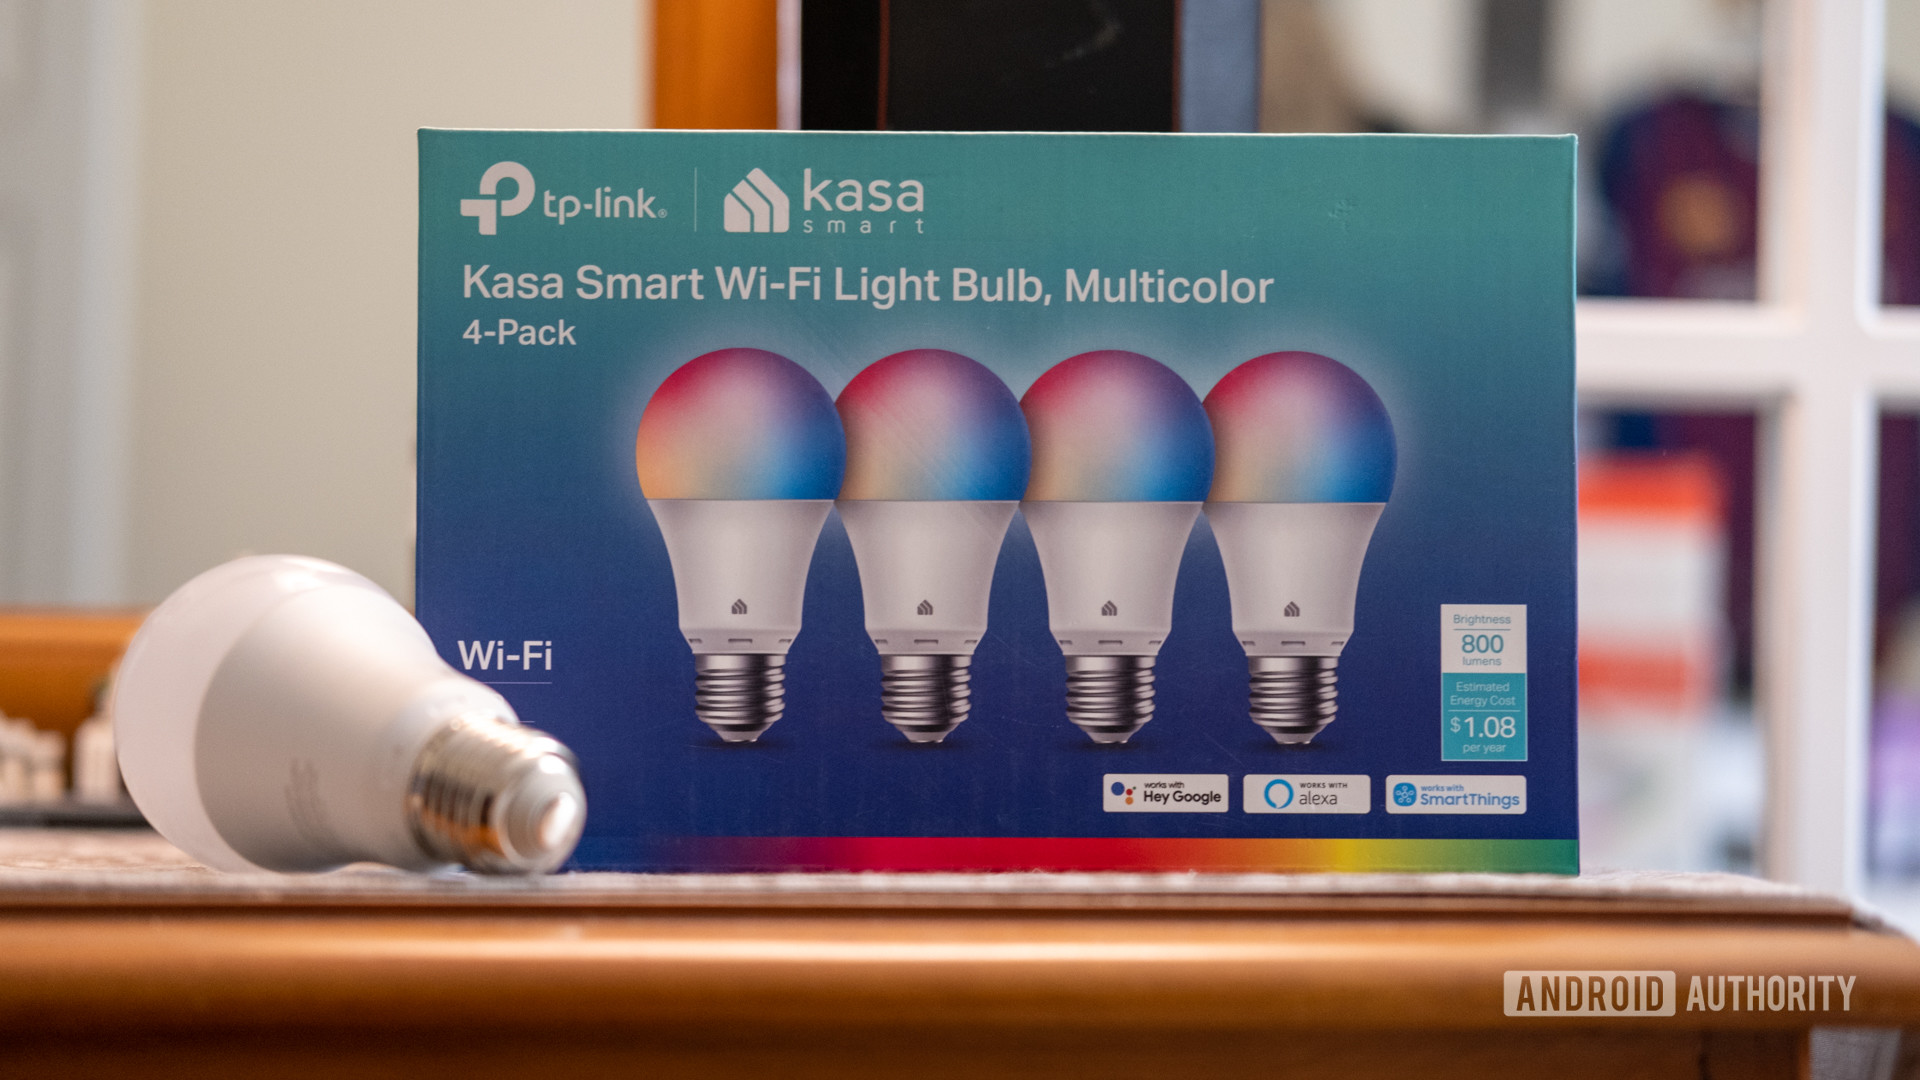 An image of the TP-Link Kasa Smart light bulb packaging